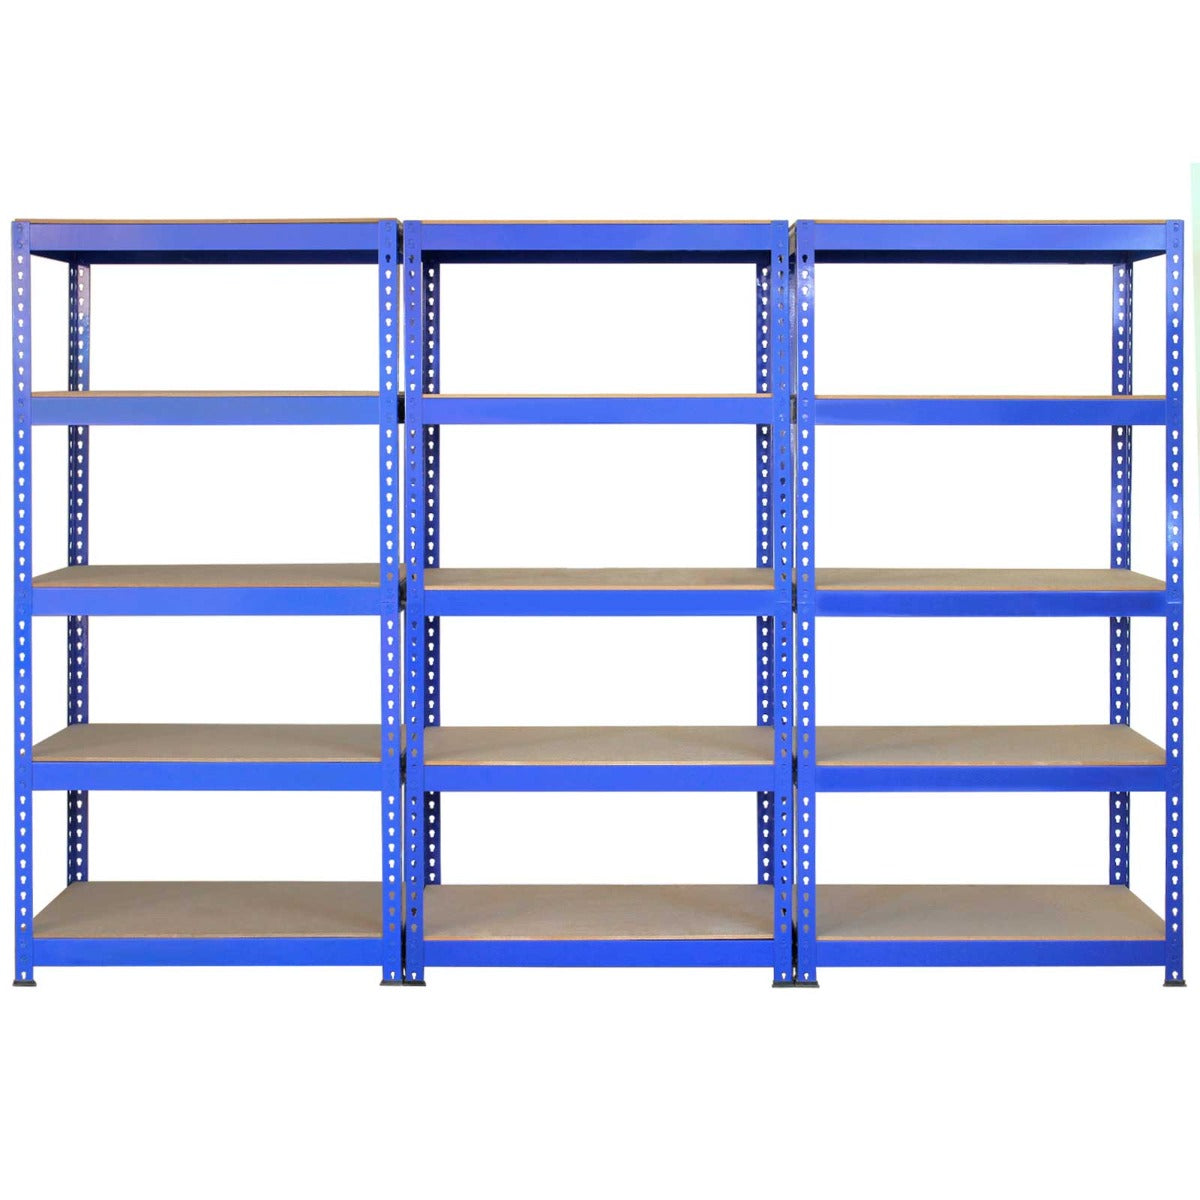 3 x Unidades de estantería metálicas Q-Rax en color azul de 90 x 50 x 180 cm